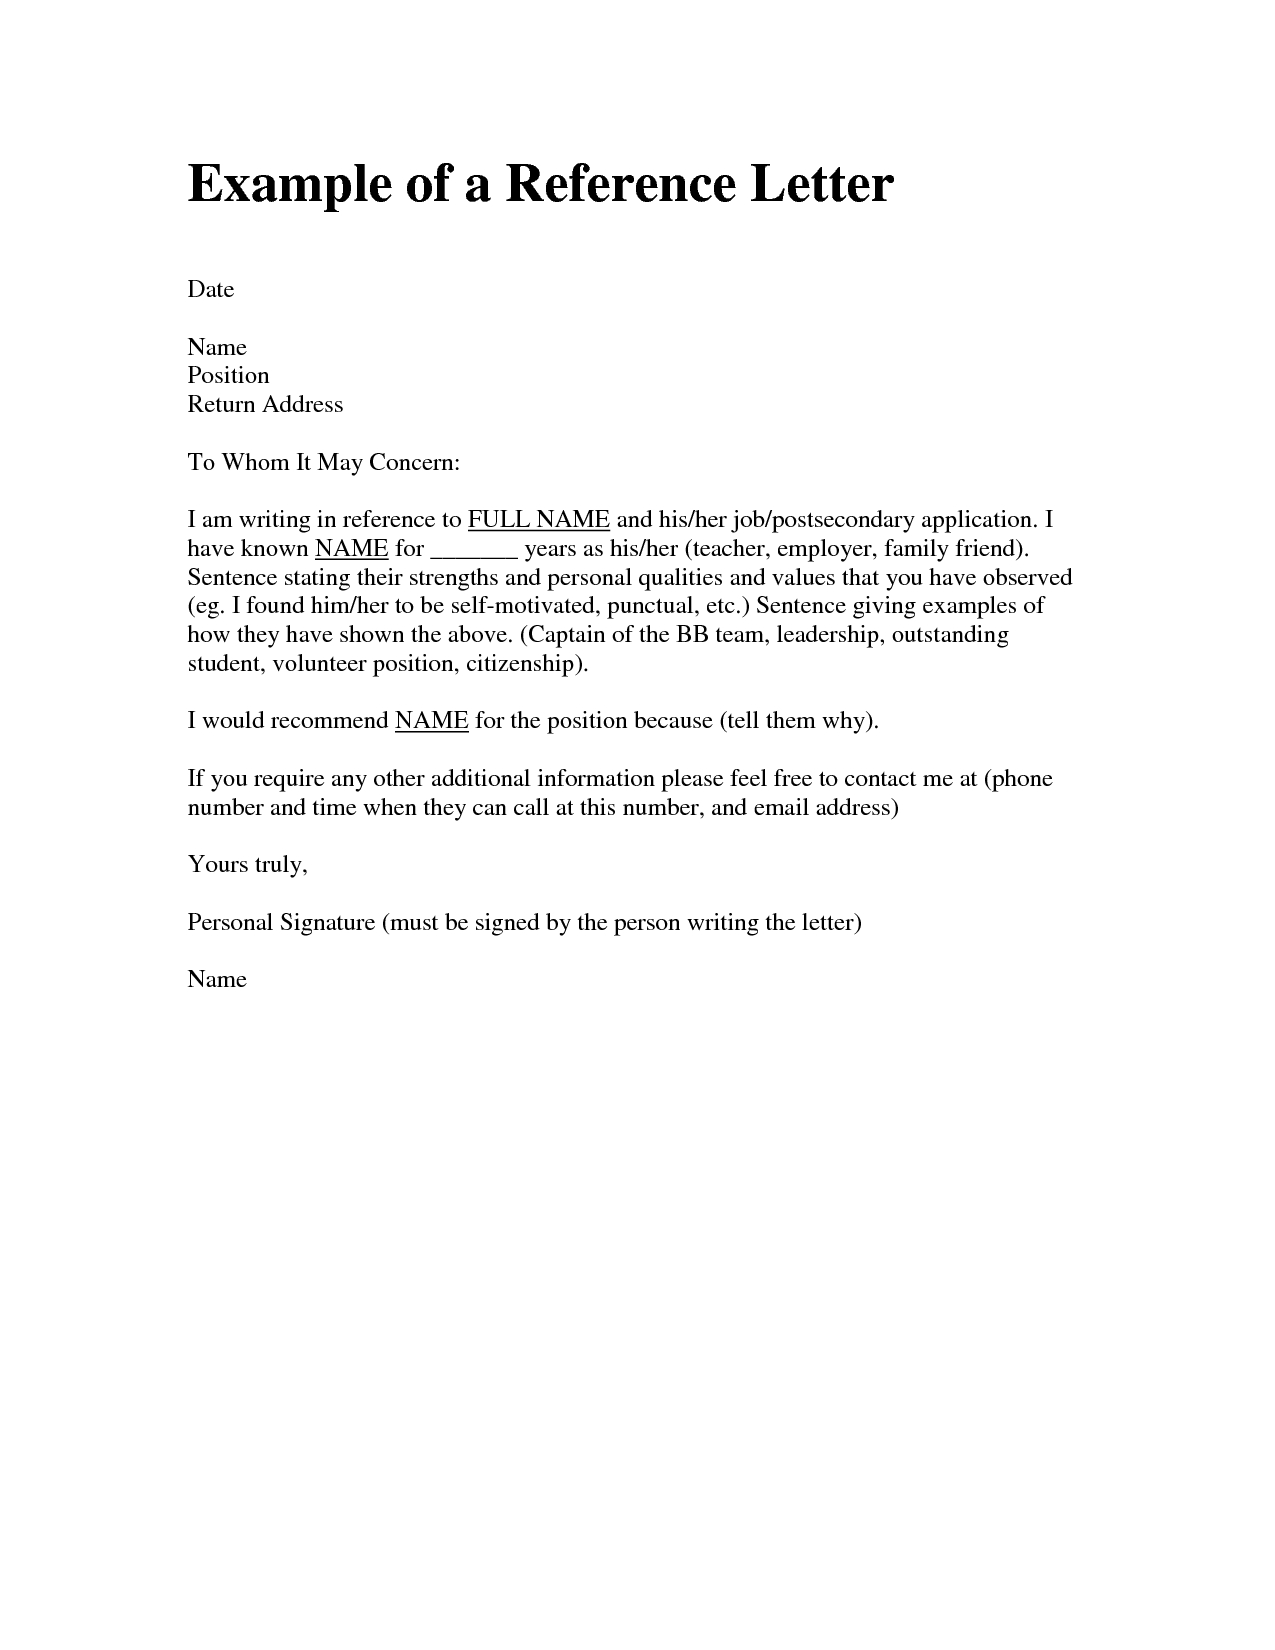 Church Recommendation Letter For Member Extended Essay Help regarding measurements 1275 X 1650